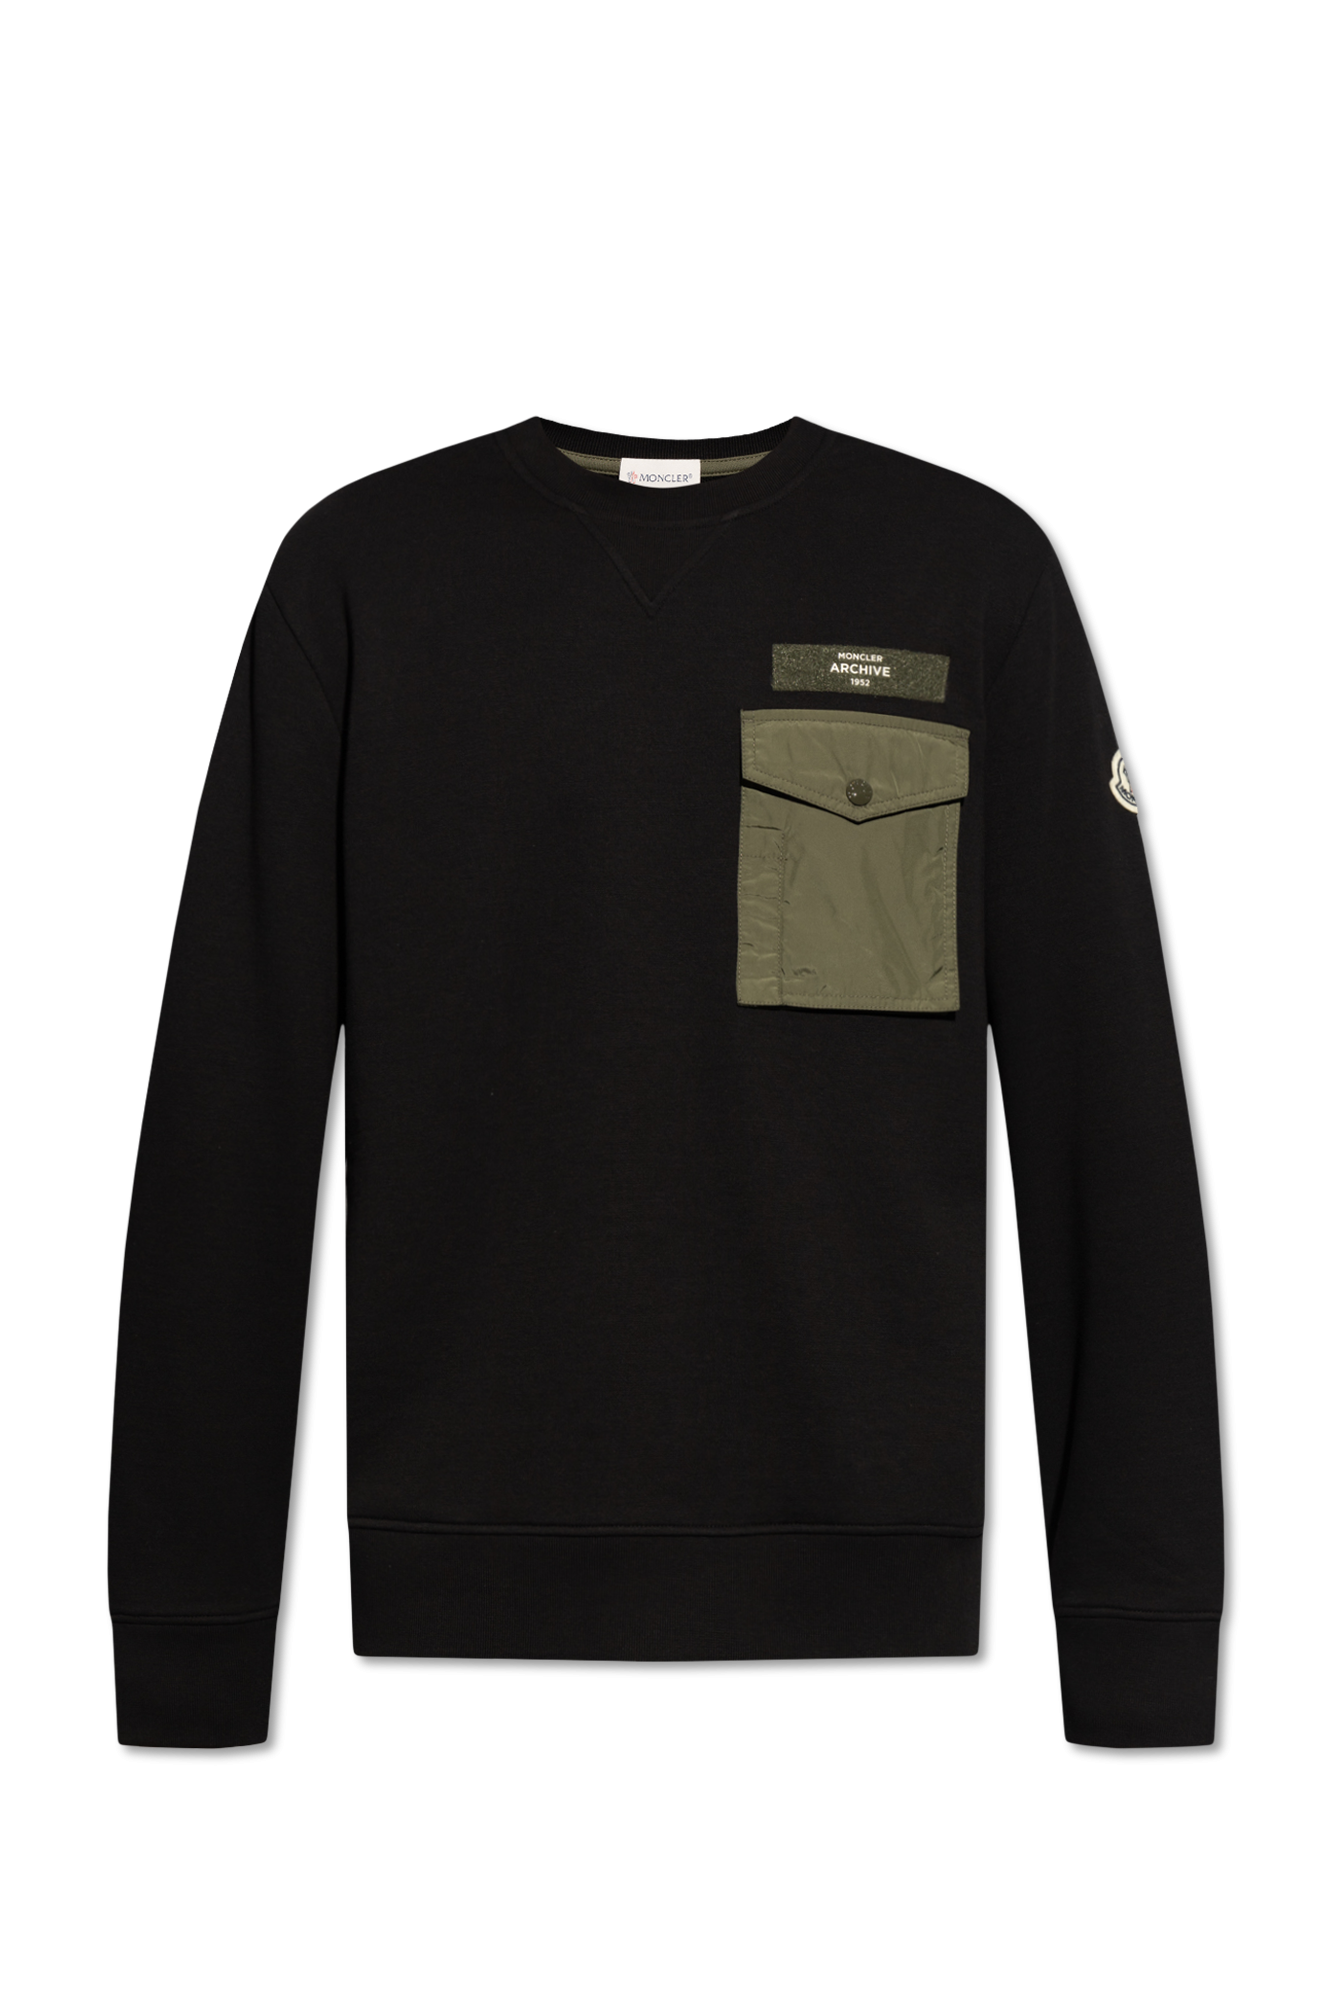 Moncler Sweatshirt with pocket, Men's Clothing